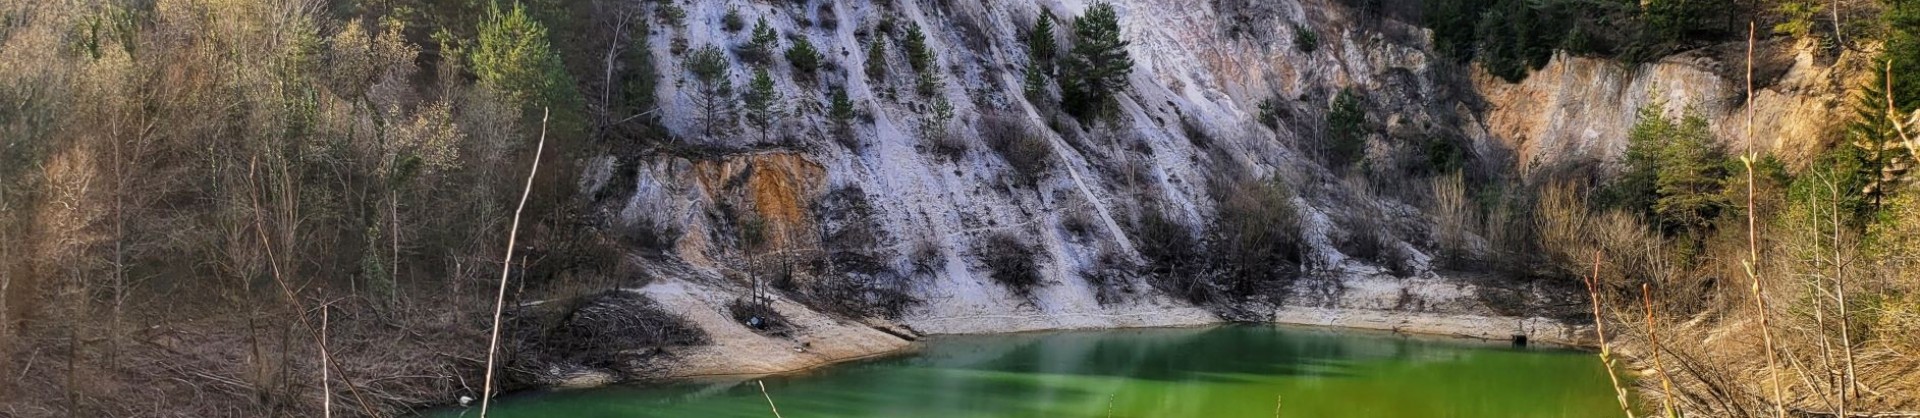 Male reberce dolenjska jezero slovenska jezera moja jezera manca korelc 1 sl